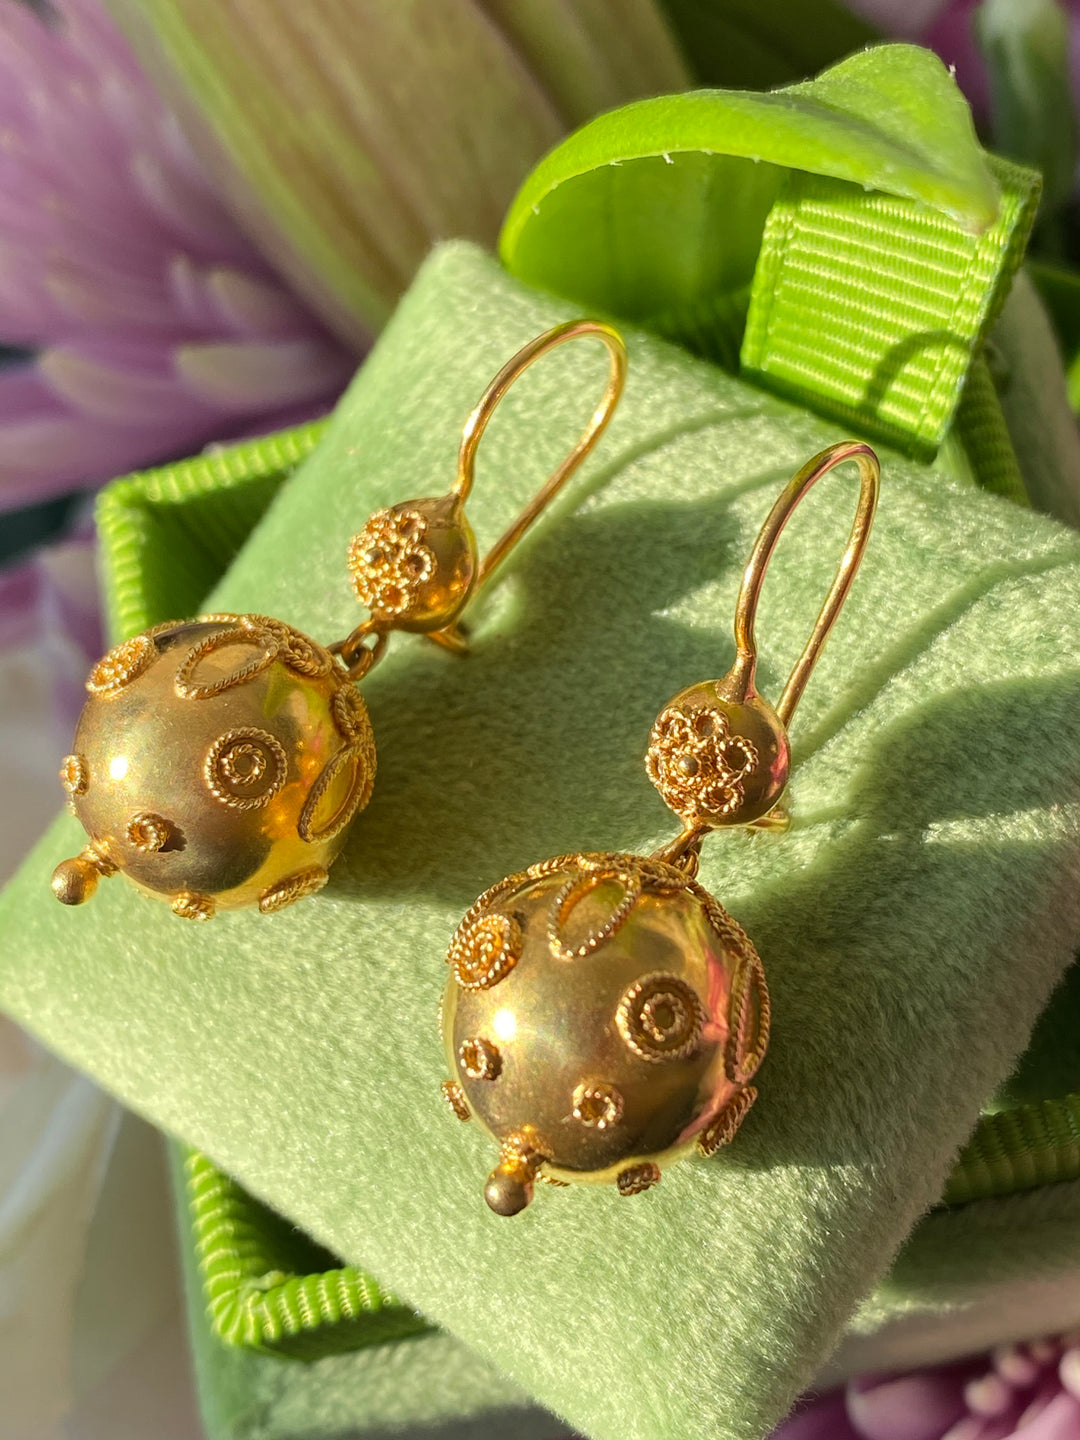 Vintage Etruscan Style Ball Drop Earrings in 14K Yellow Gold